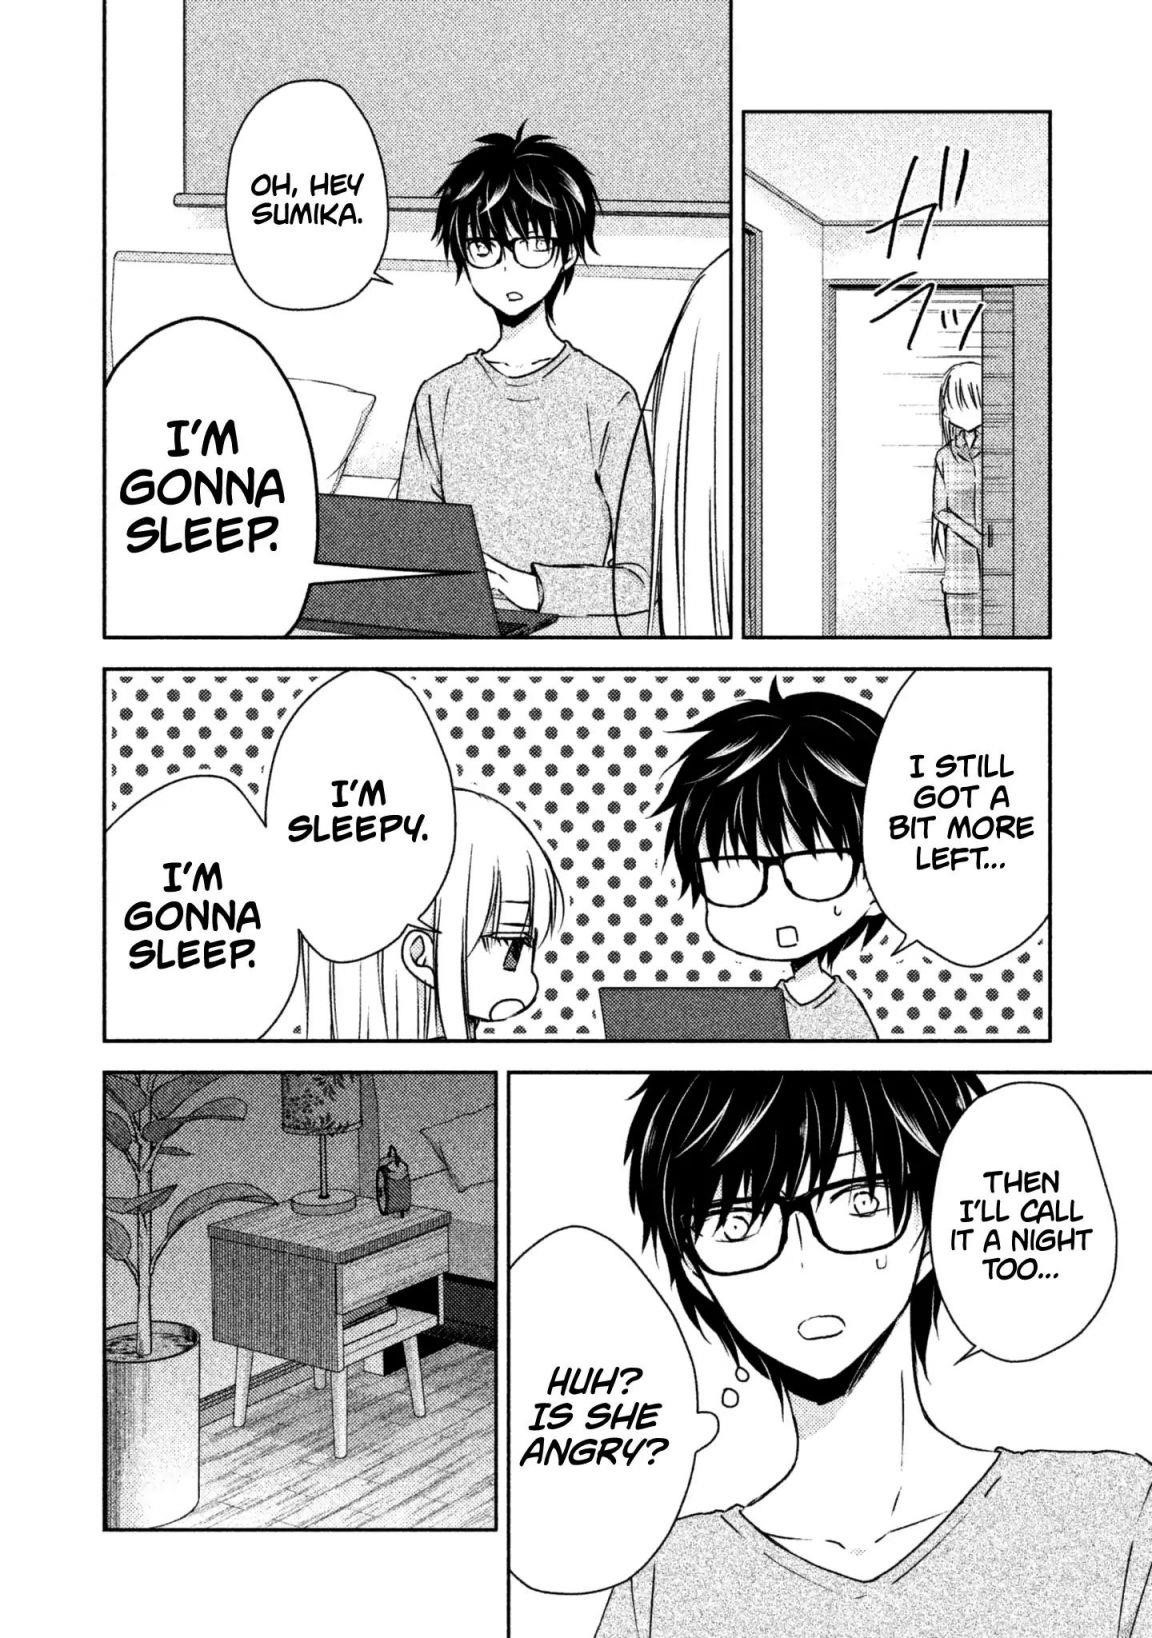 manga about adult otakus dating anime